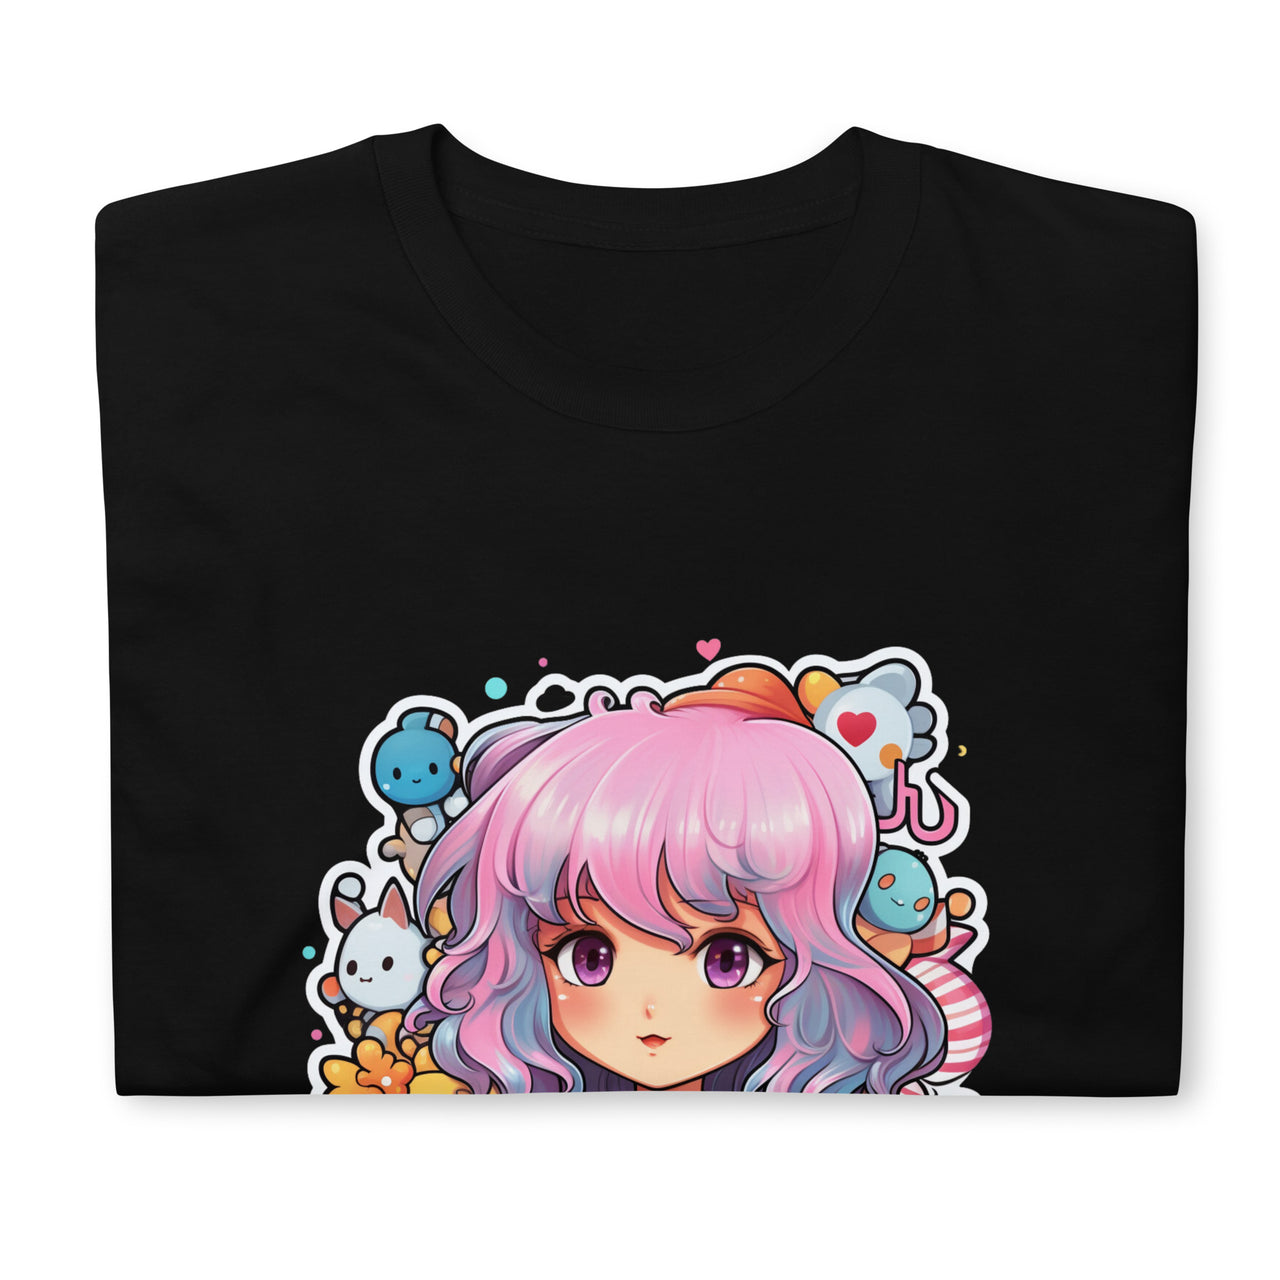 Kawaii Kingdom Anime Girl Cute Critters T-Shirt